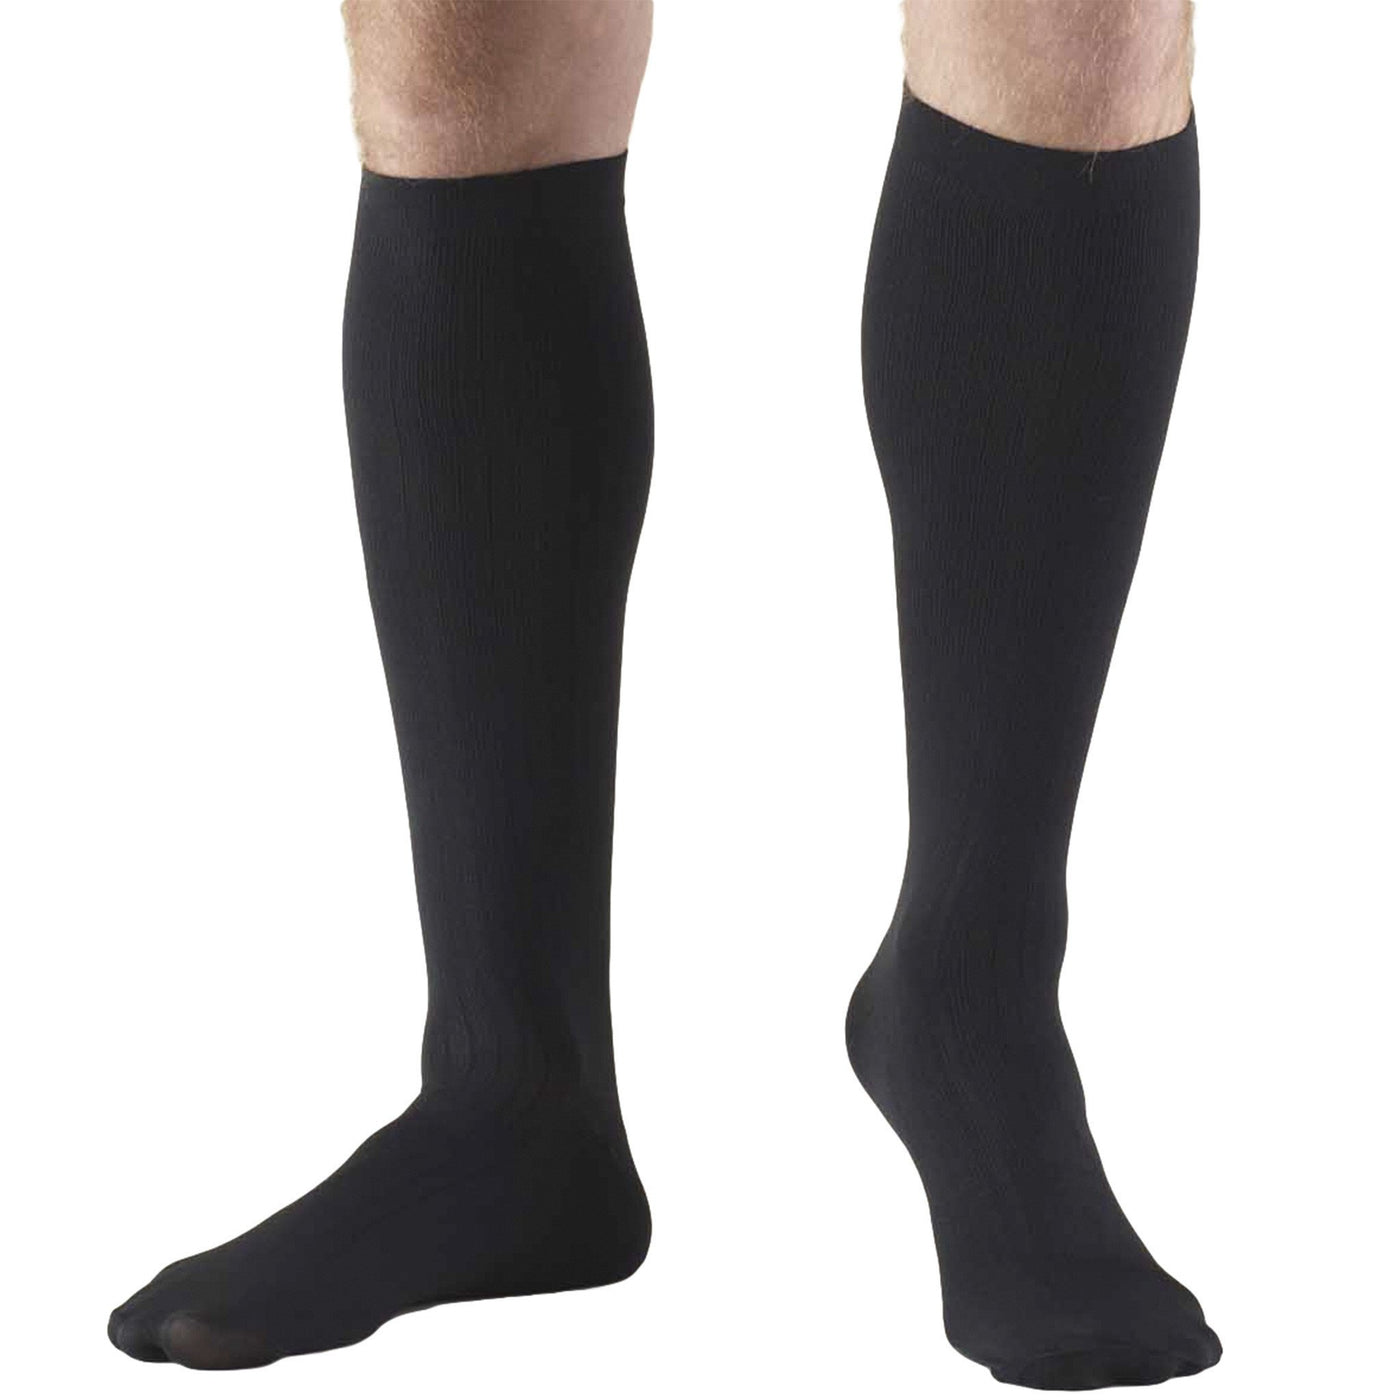 Men's Knee High Compression Socks, 8-15 mmHg, Dress Style, Black, 1942 ...